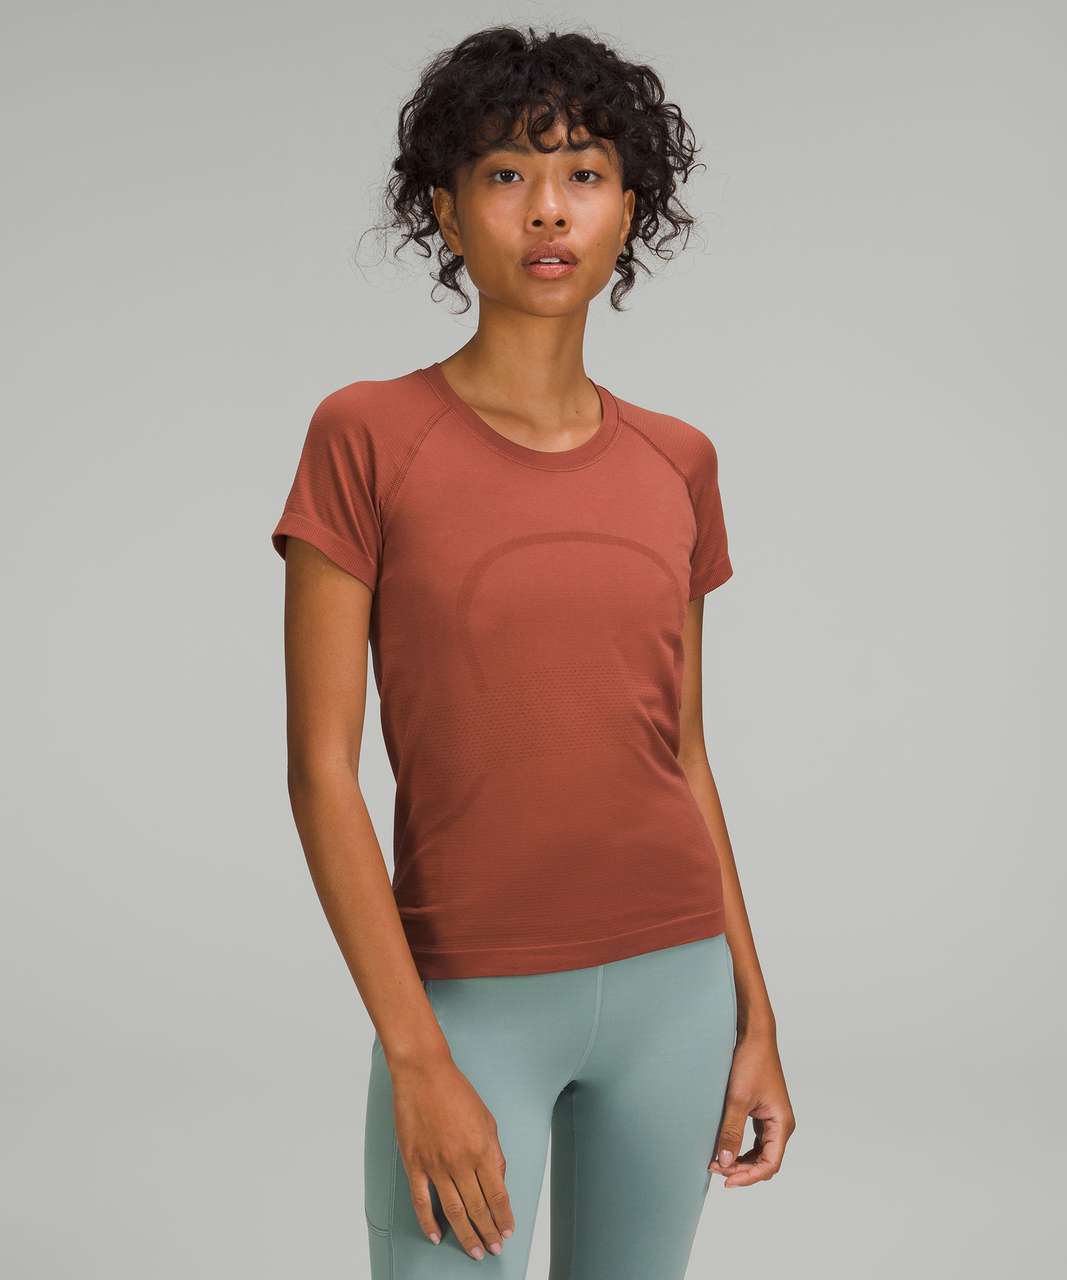 Lululemon Swiftly Tech Short Sleeve Shirt 2.0 *Race Length - Ancient Copper / Ancient Copper